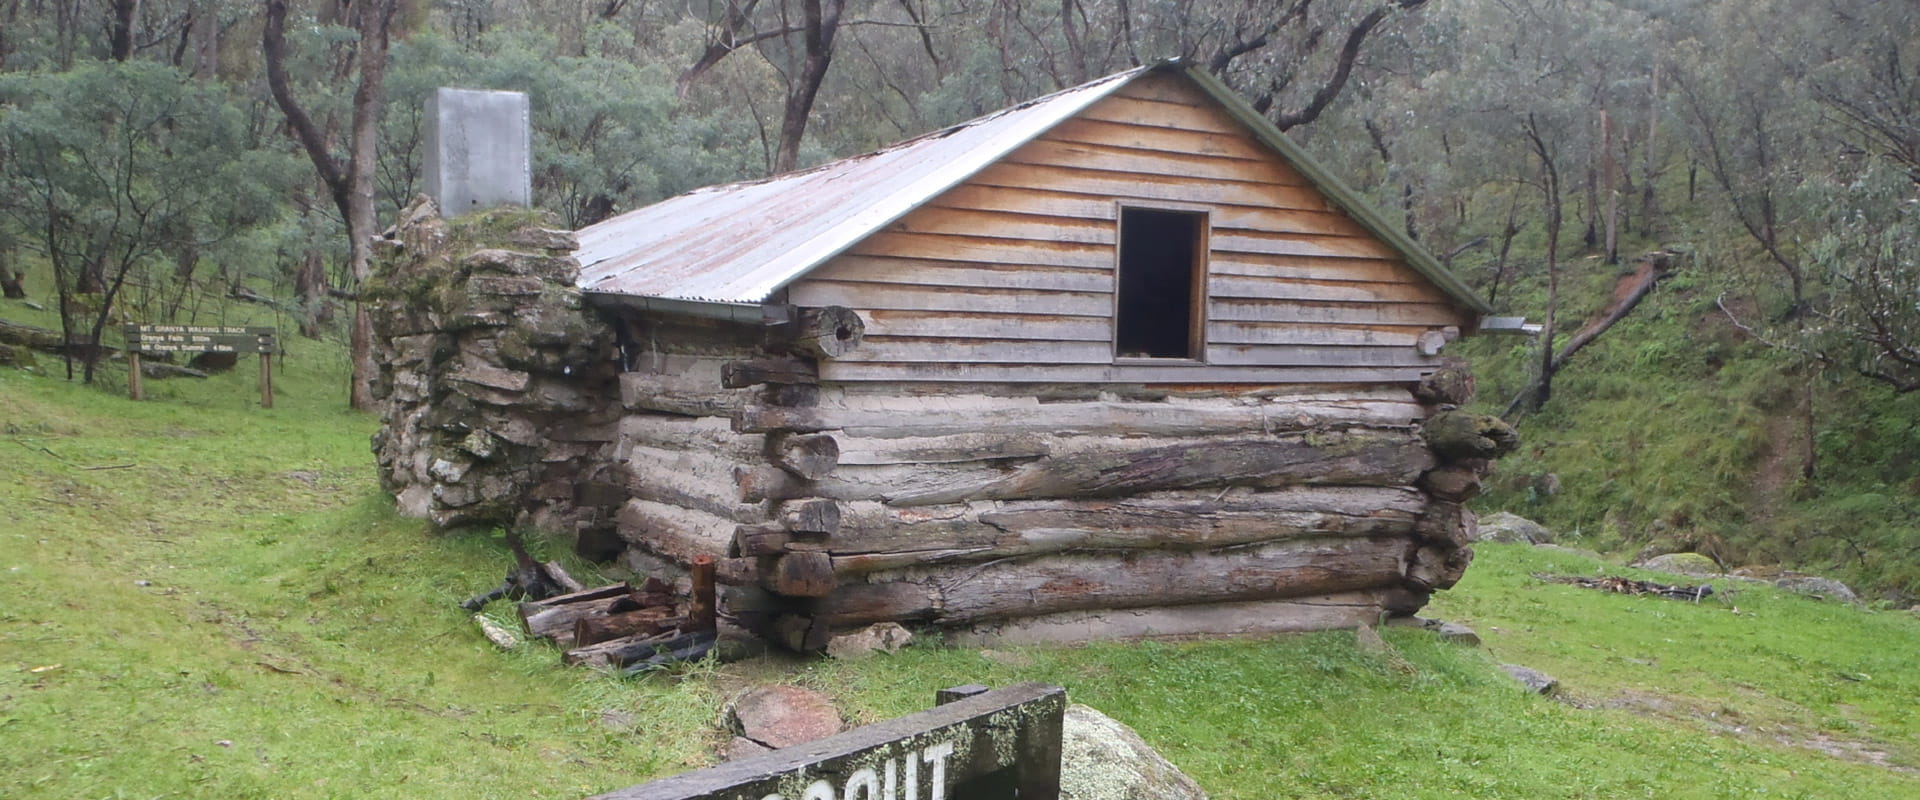 A historic hut set amongst a gassy hill in a green bushland